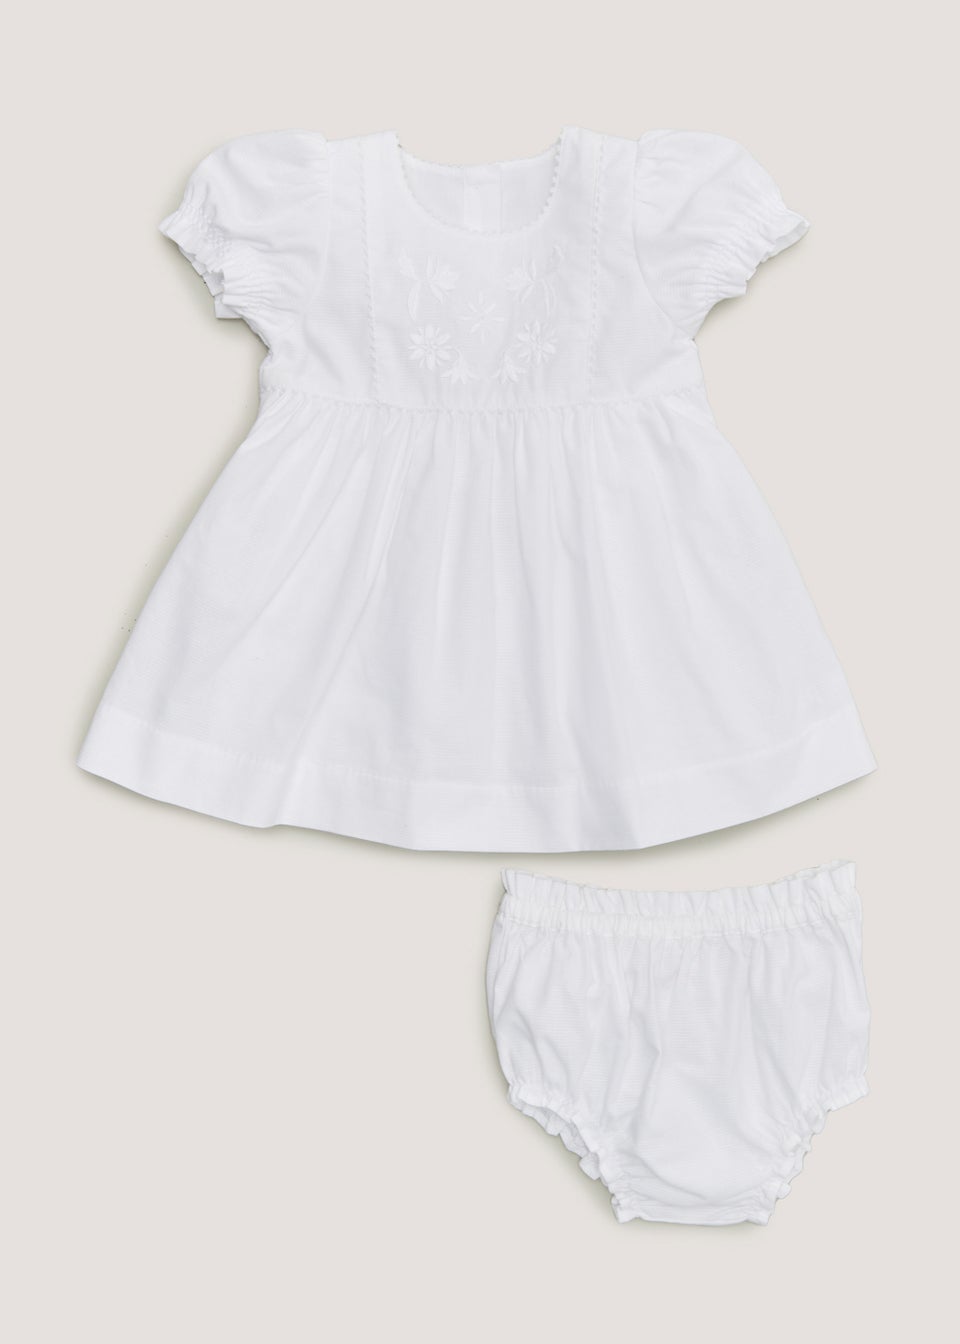 Baby White Jacquard Dress And Knickers Set Newborn 18mths Matalan